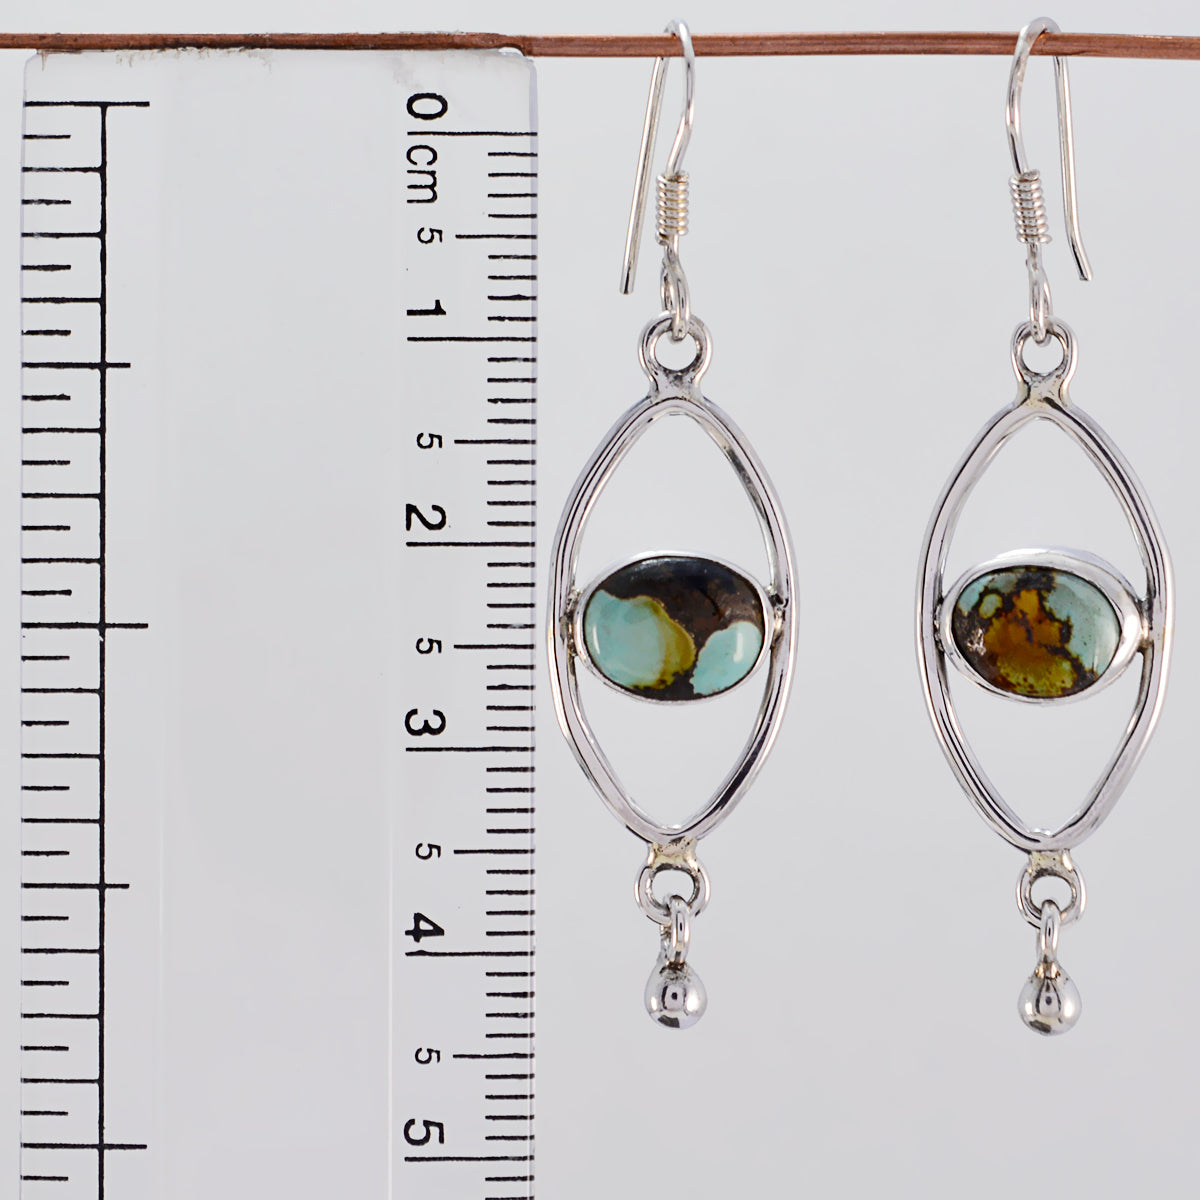 Riyo Real Gemstones oval Cabochon Multi Turquoise Silver Earring halloween gift